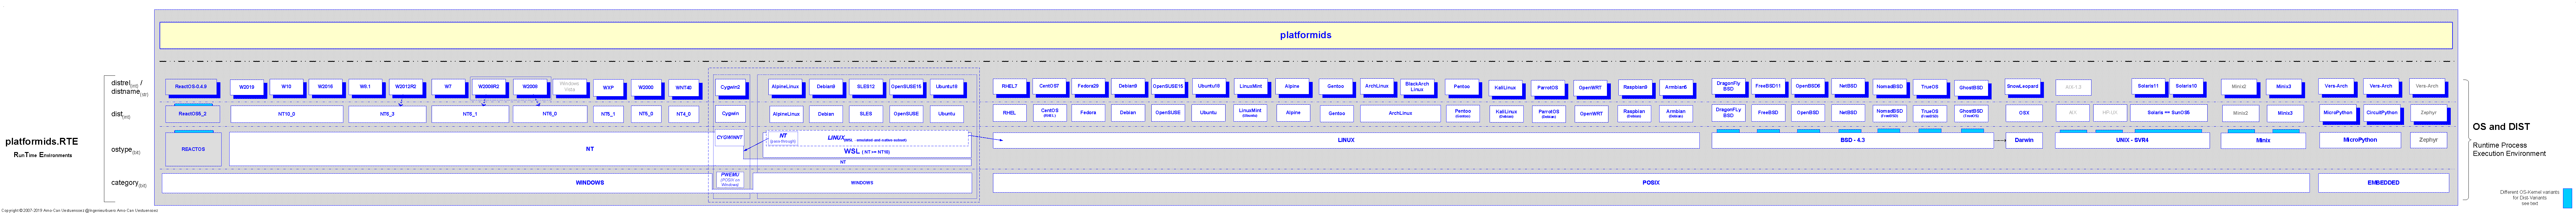 _images/platformids-blueprint.png